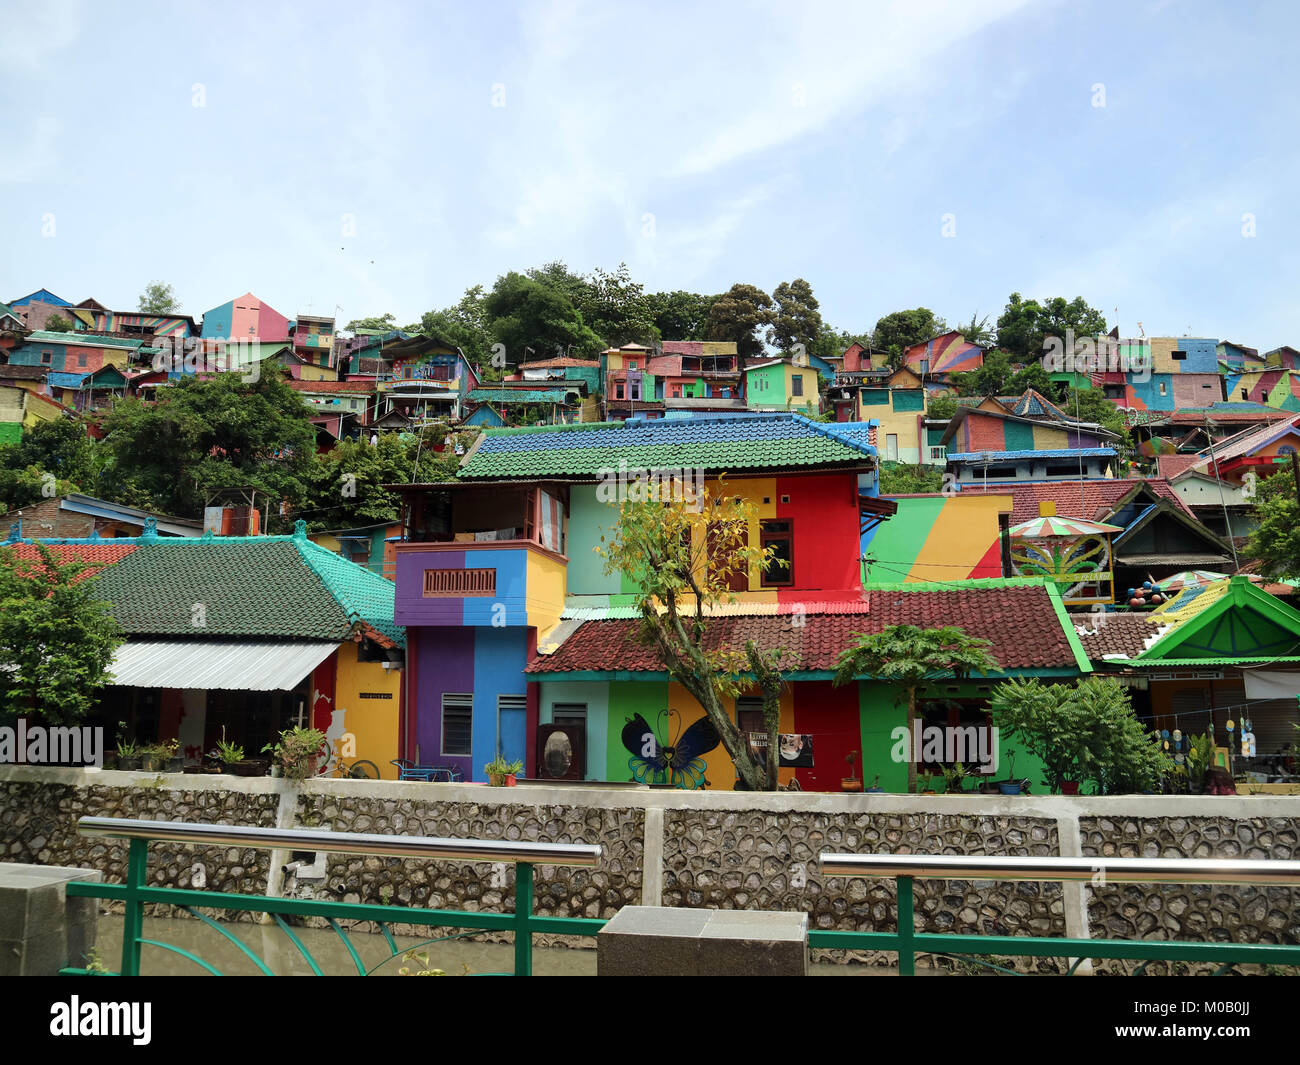 Die bunten oder 'Rainbow' Dorf (Kampung Pelangi) in Semarang, Zentraljava, Indonesien. Es war slumgebiet vor. Bild wurde im Januar 2018 getroffen. Stockfoto